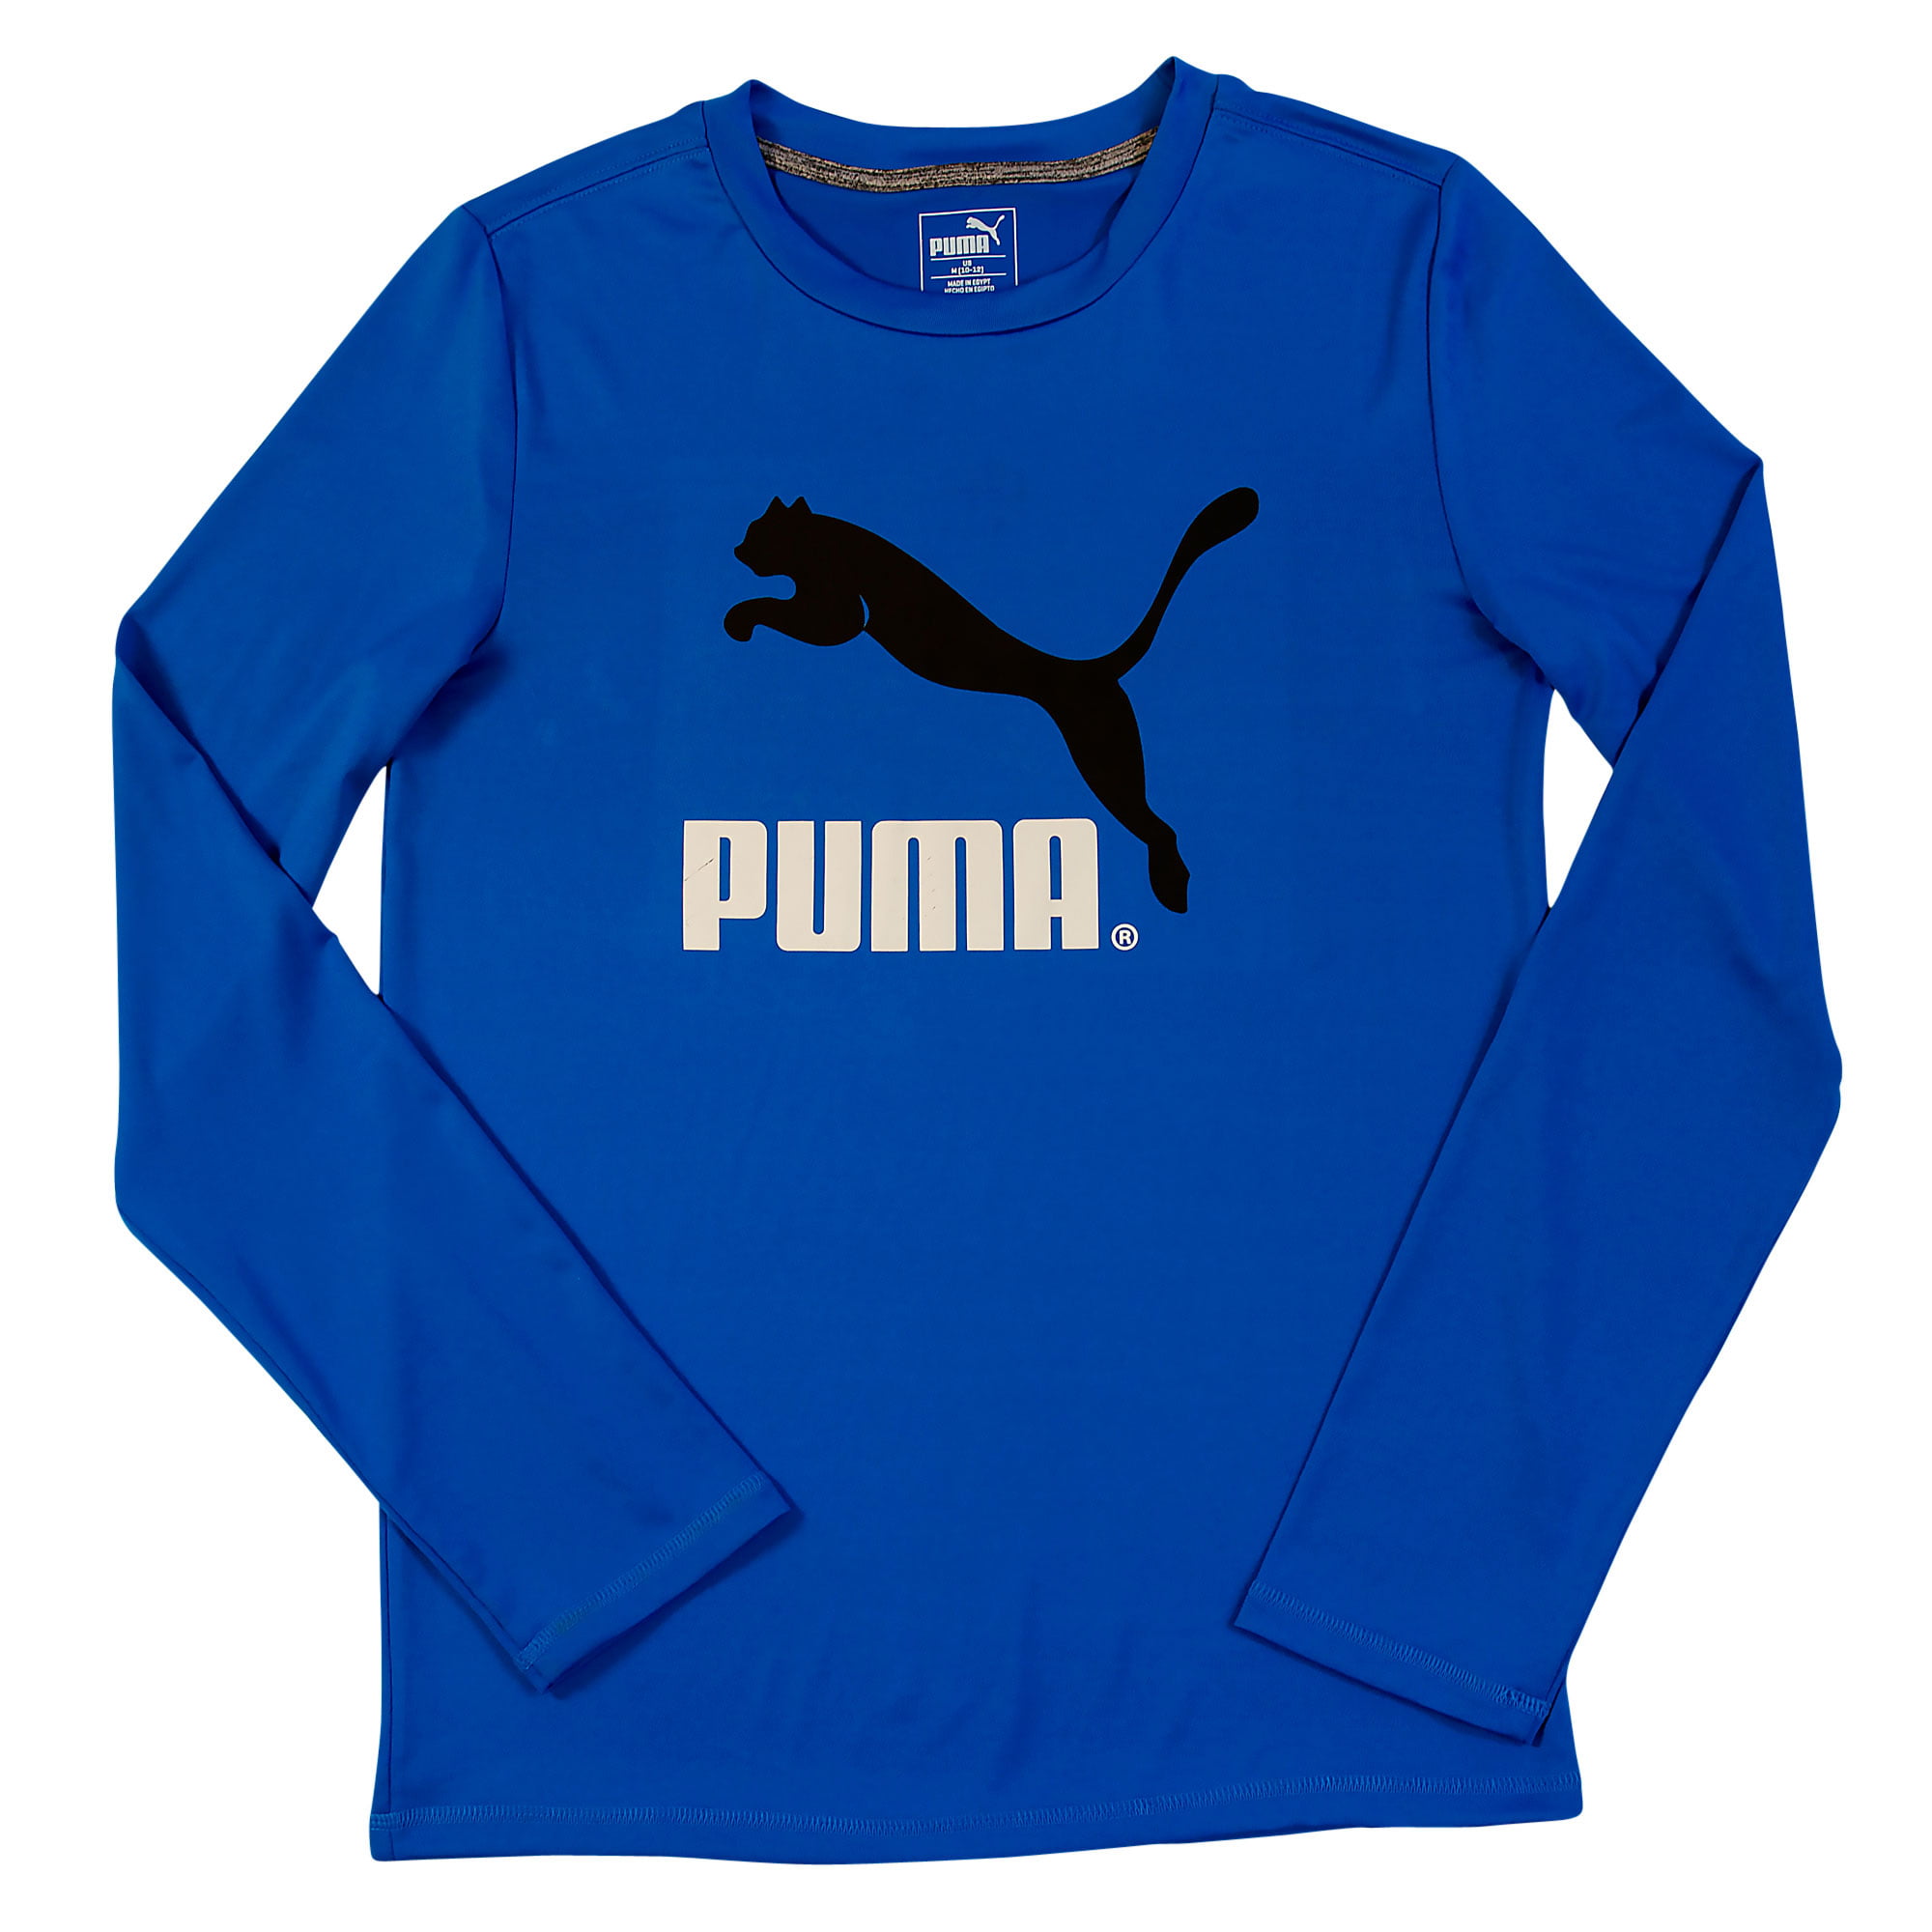 Buy > royal blue puma shirt > in stock